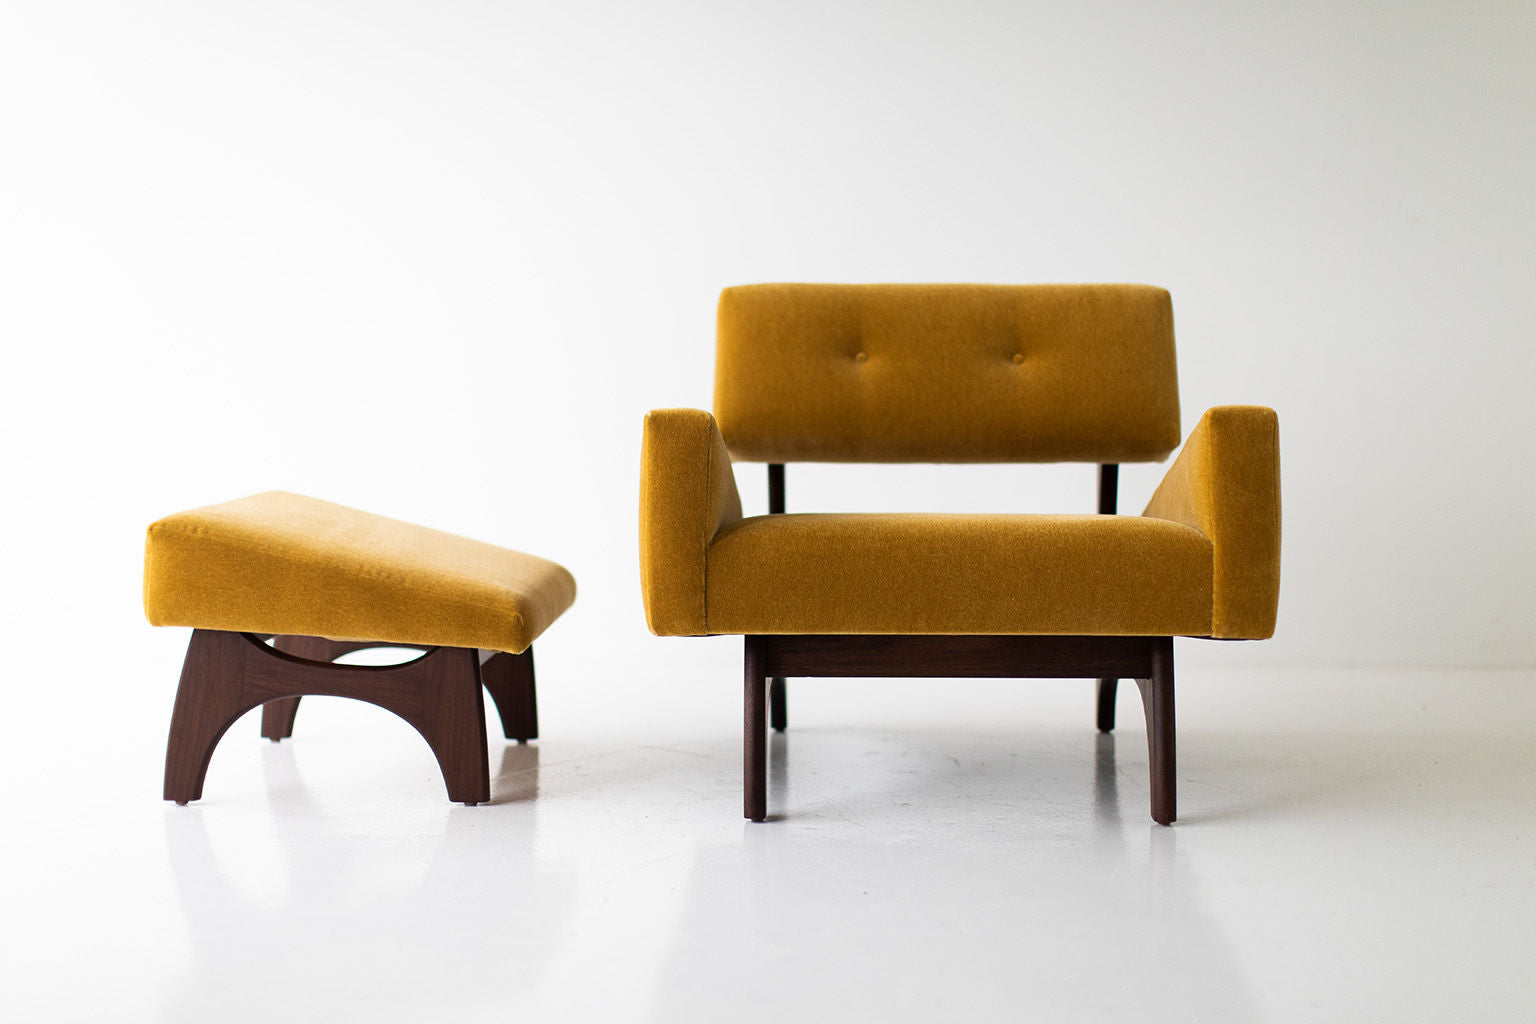      canadian-modern-upholstered-ottoman-2315-03